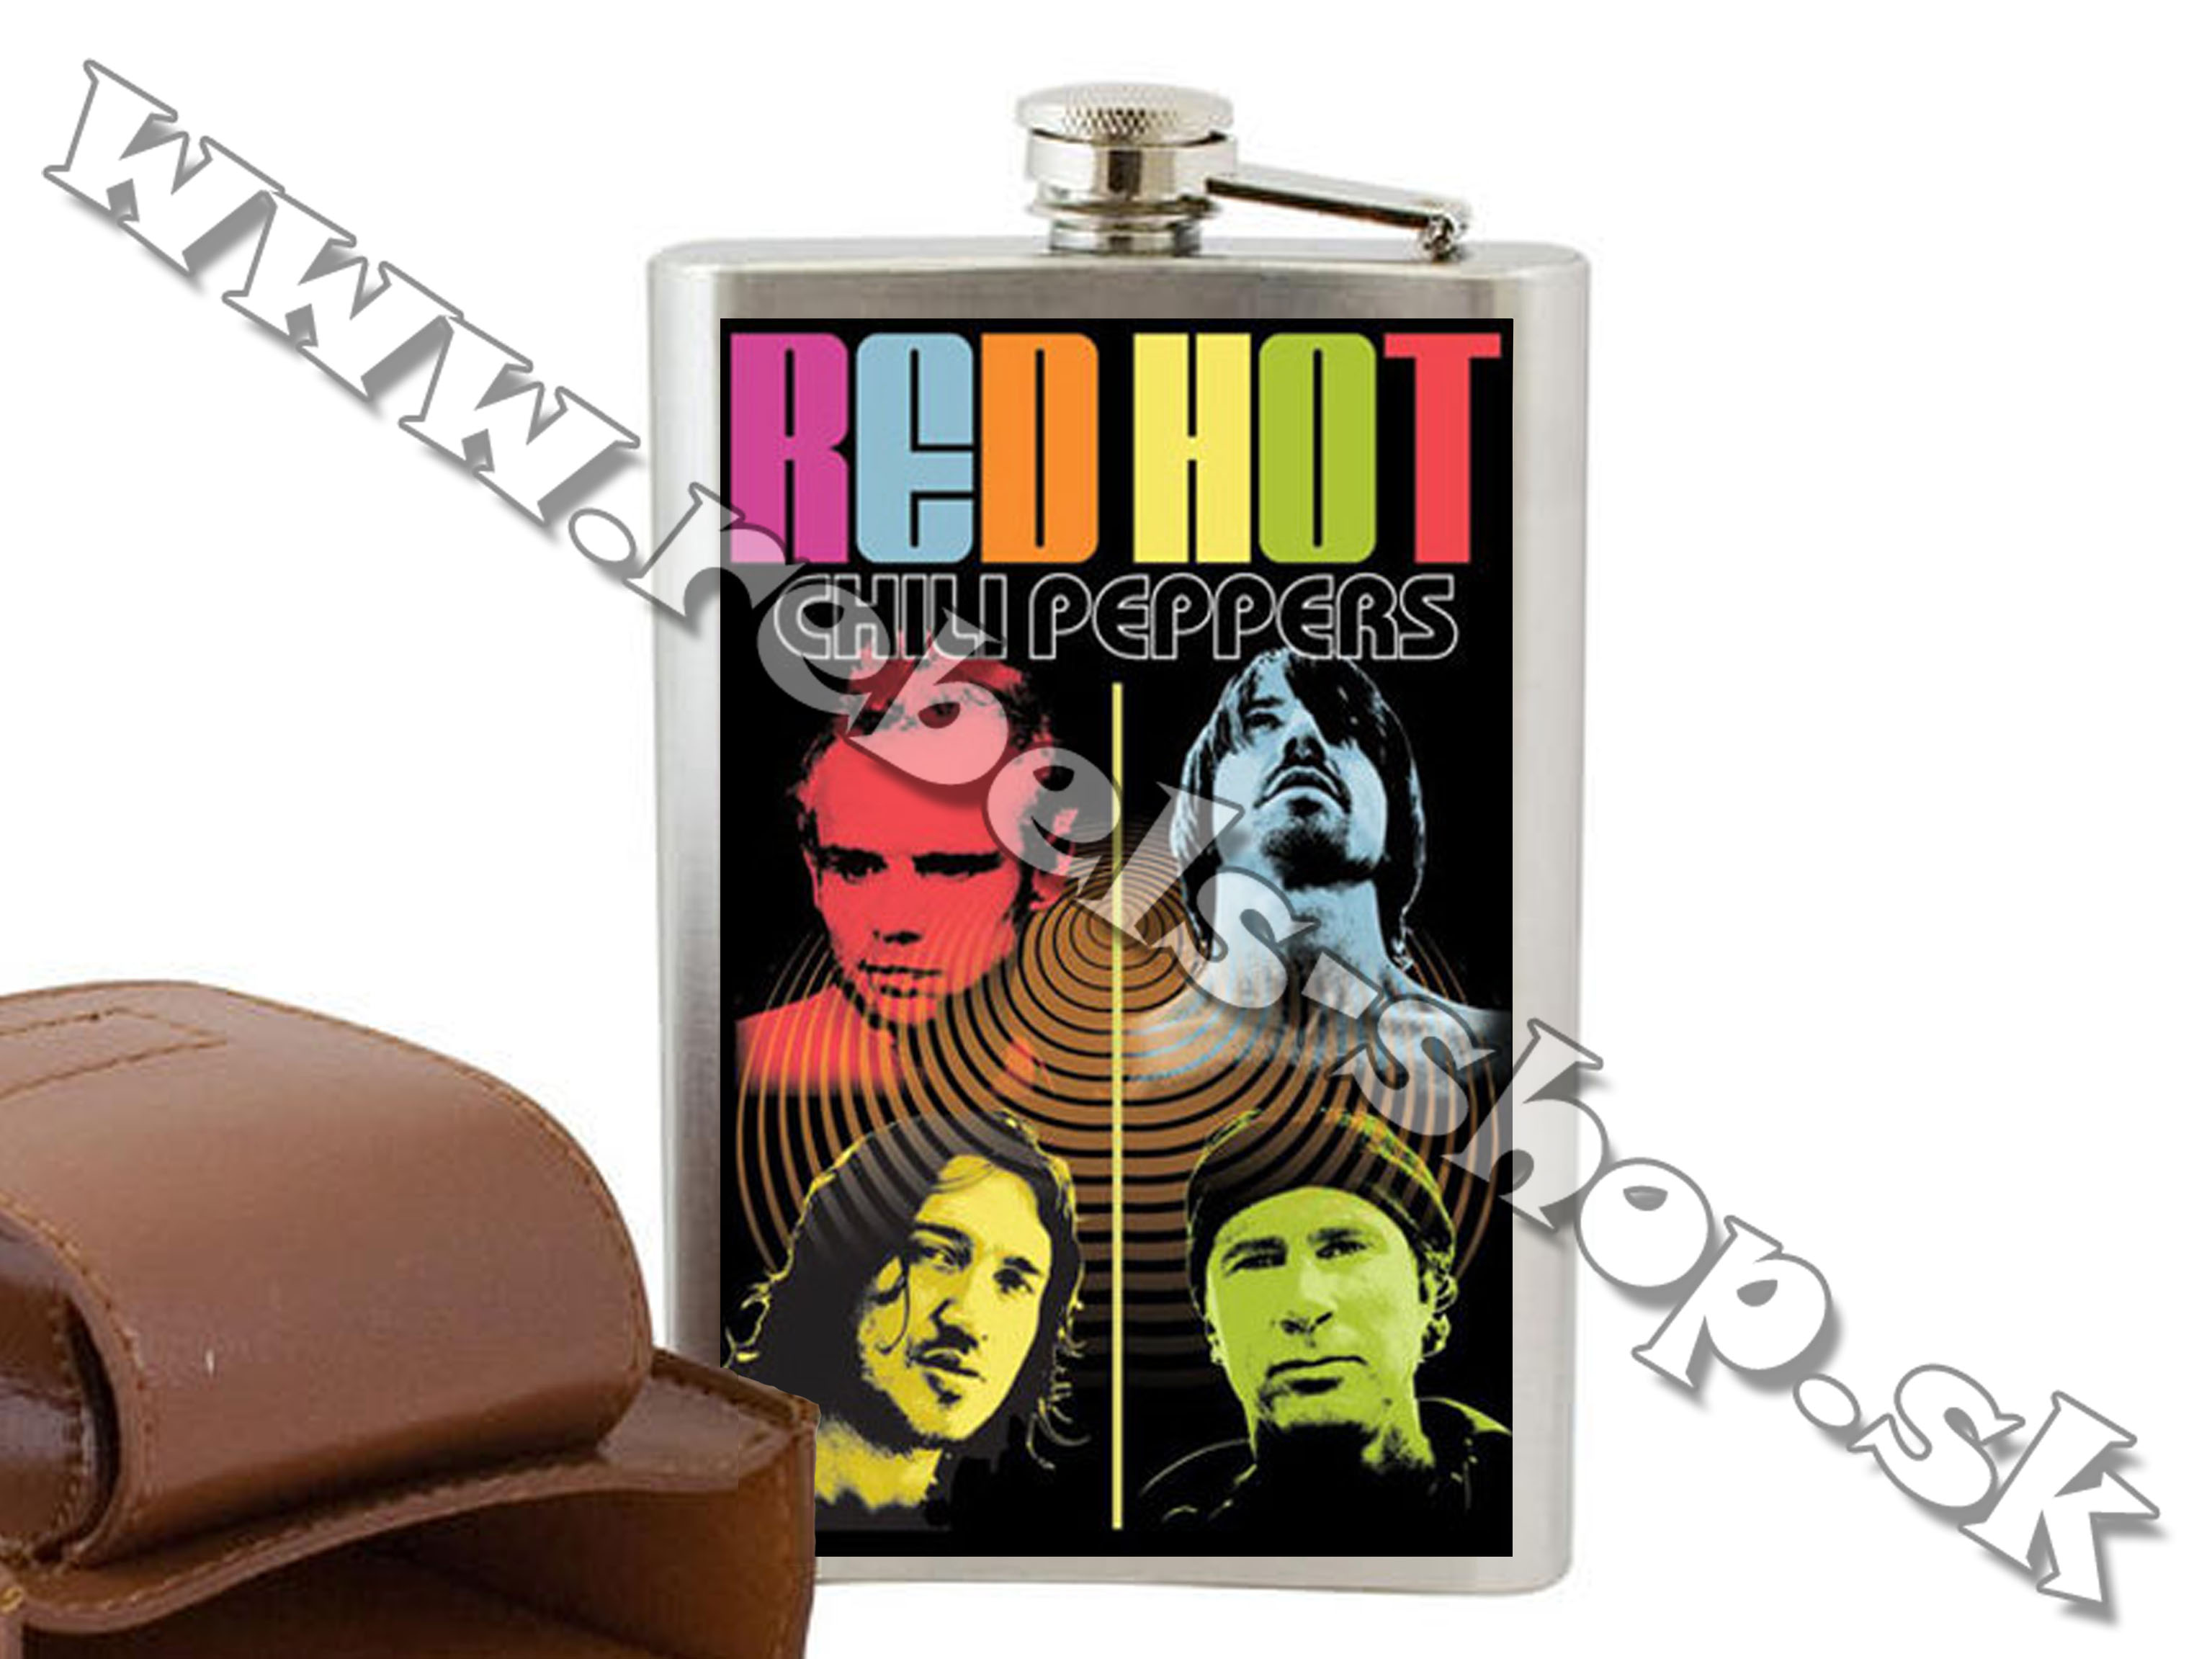 Ploskačka "Red Hot Chili Peppers"